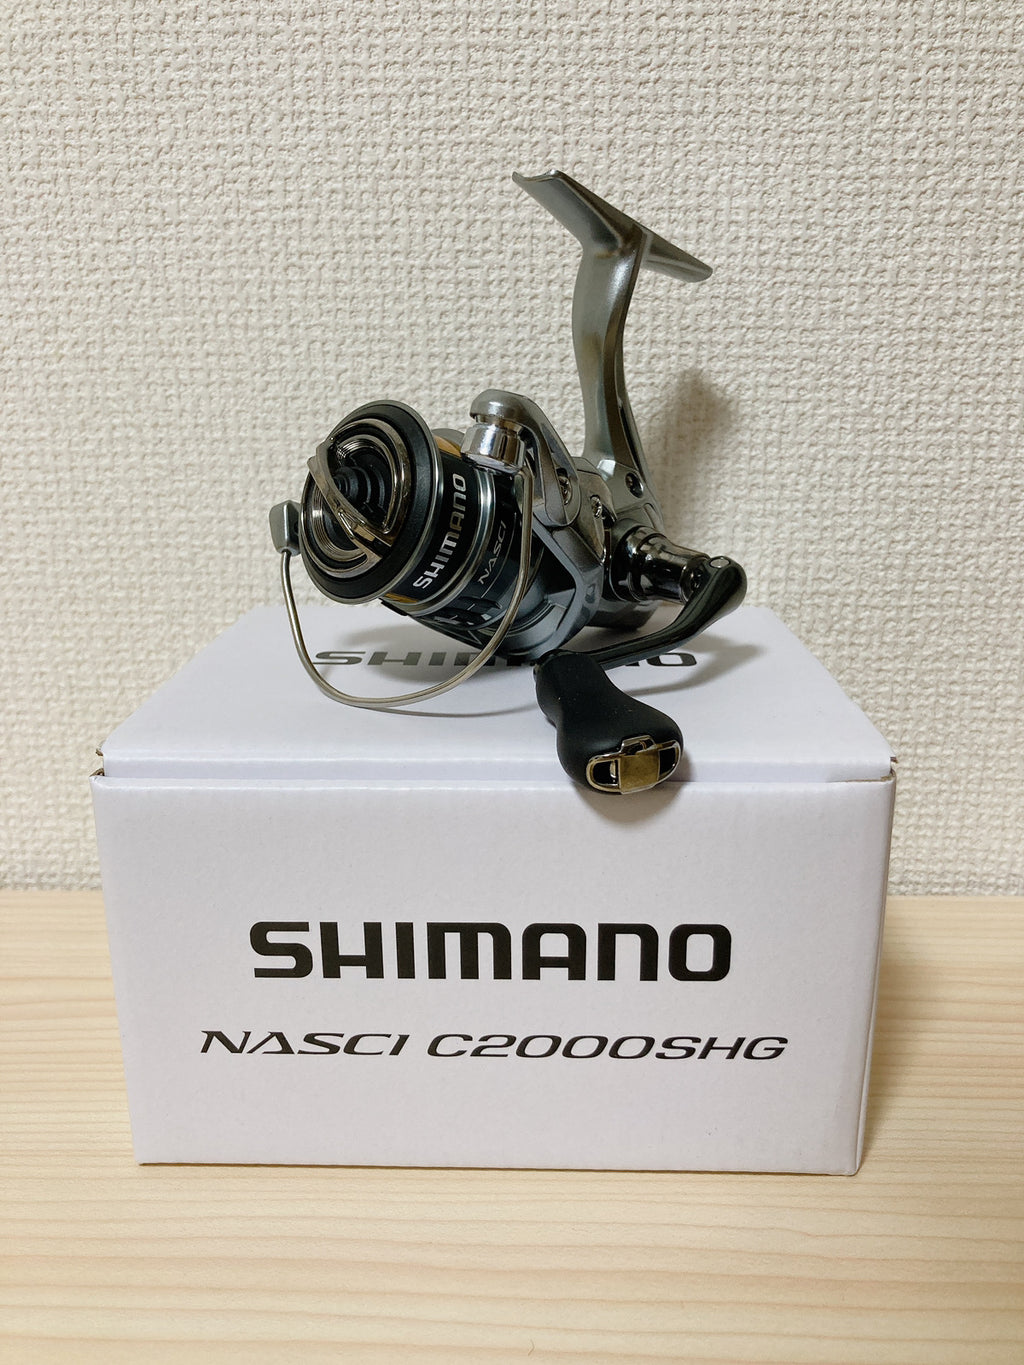 Shimano Spinning Reel 21 NASCI 500 Gear Ratio 5.6:1 Fishing Reel